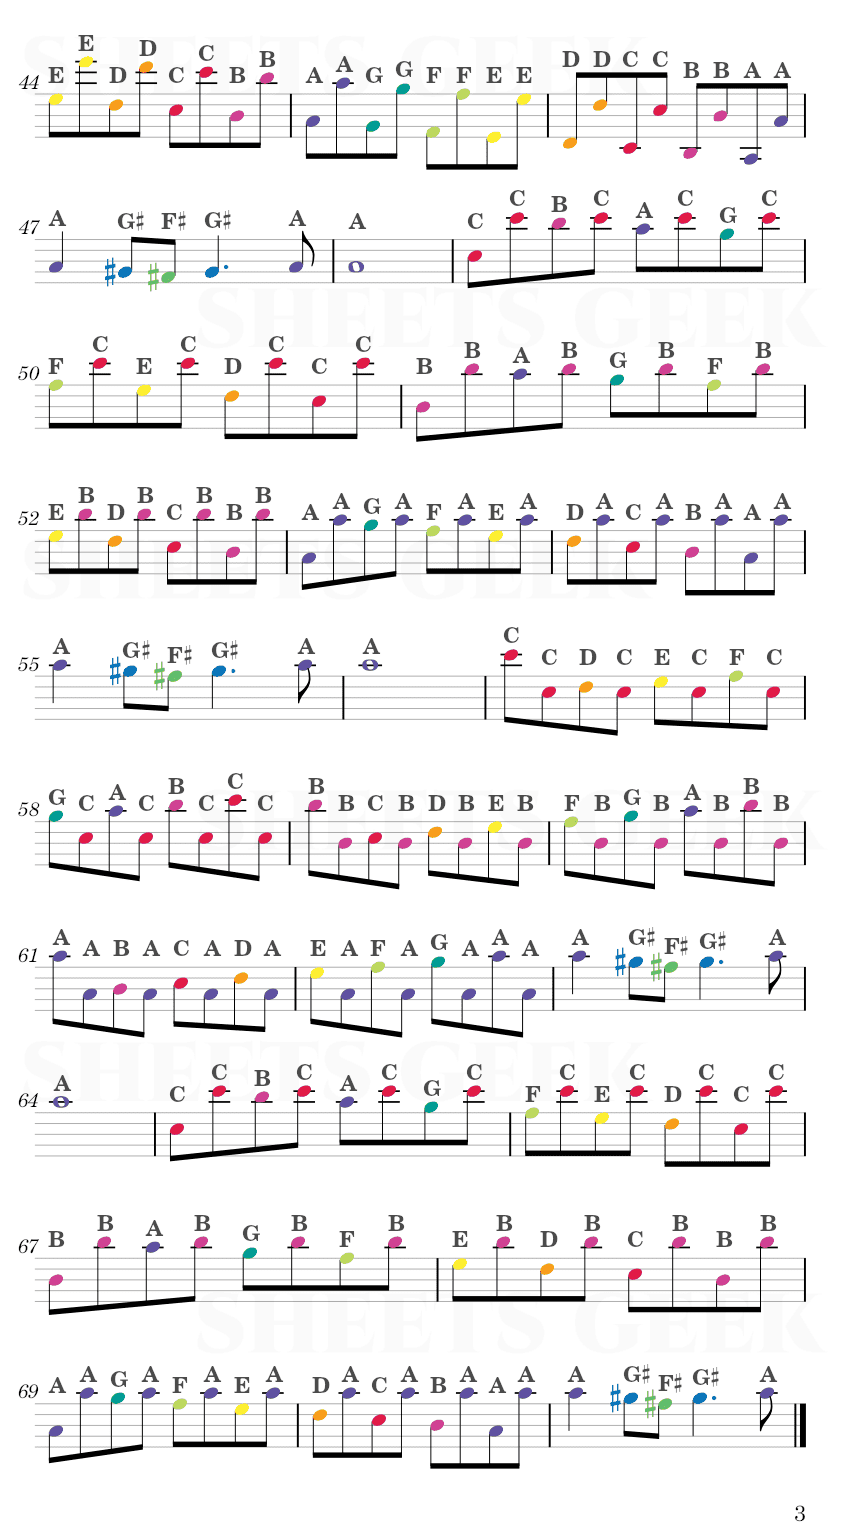 Passacaglia - Johan Halvorsen Easy Sheet Music Free for piano, keyboard, flute, violin, sax, cello page 3